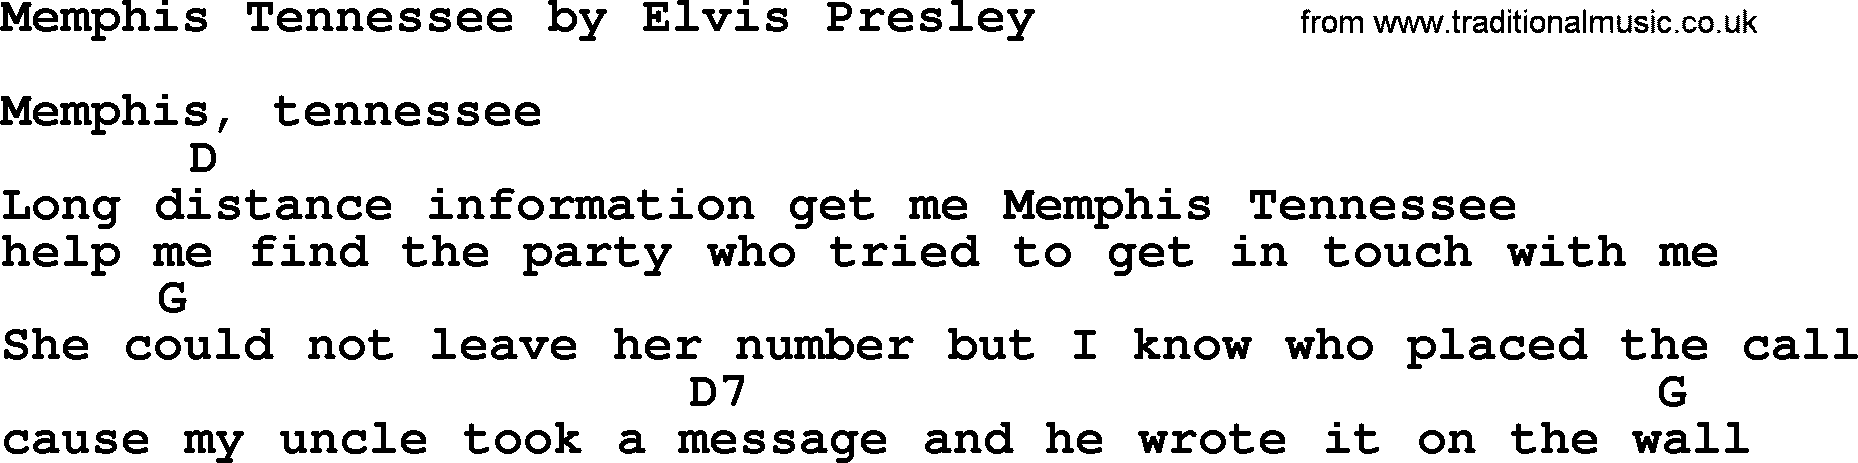 Elvis Presley song: Memphis Tennessee, lyrics and chords